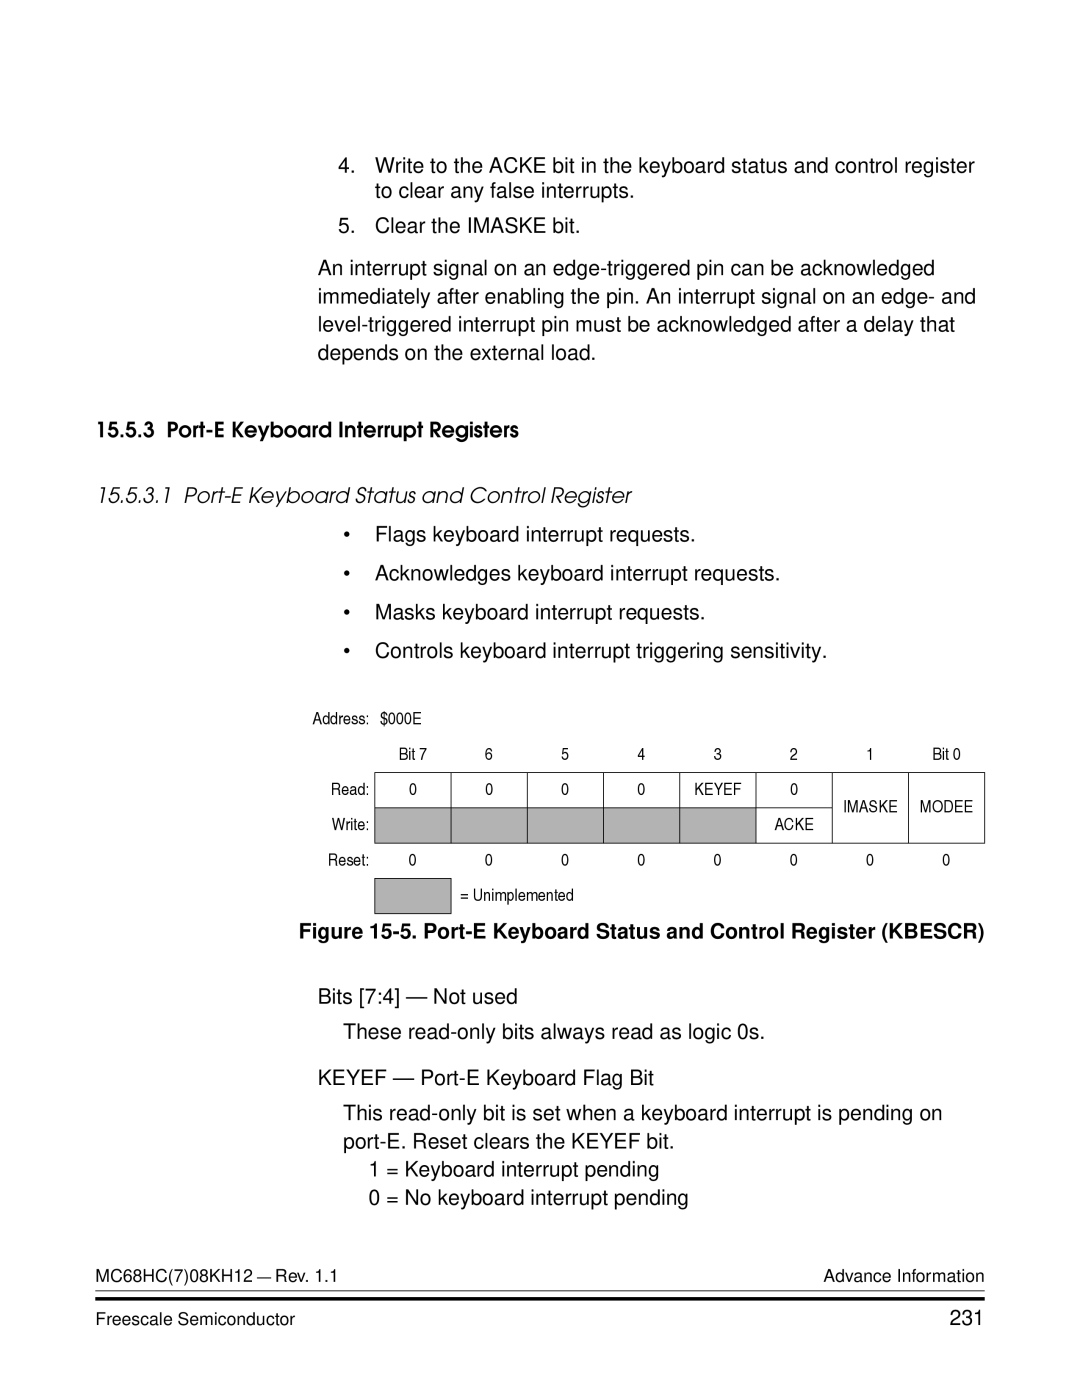 Freescale Semiconductor MC68HC08KH12 manual Port-E Keyboard Status and Control Register, 231 